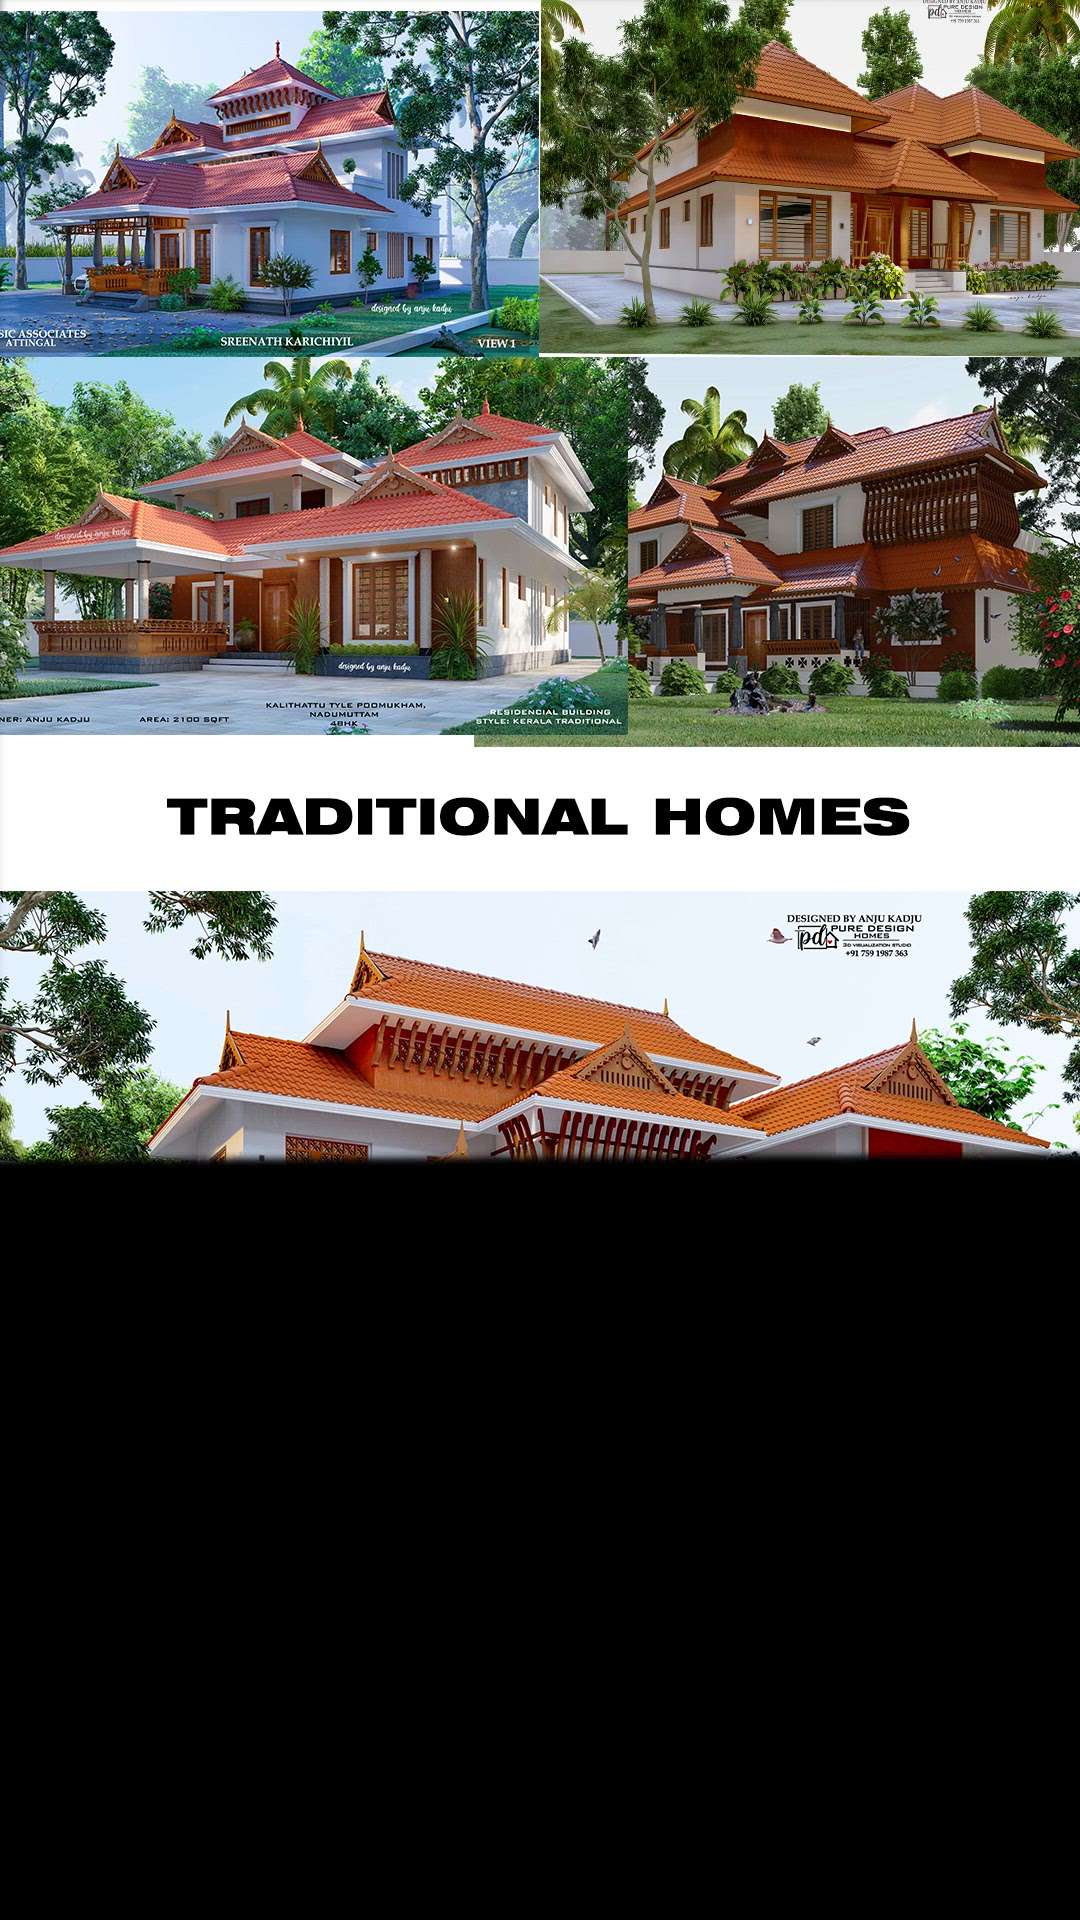 best kerala traditional house designs in one frame
❤️
design : anju kadju
#TraditionalHouse #ElevationHome #KeralaStyleHouse 
നിങ്ങളുടെ വീടും ഞങ്ങളിലൂടെ design ചെയ്യാം ❤️❤️❤️❤️